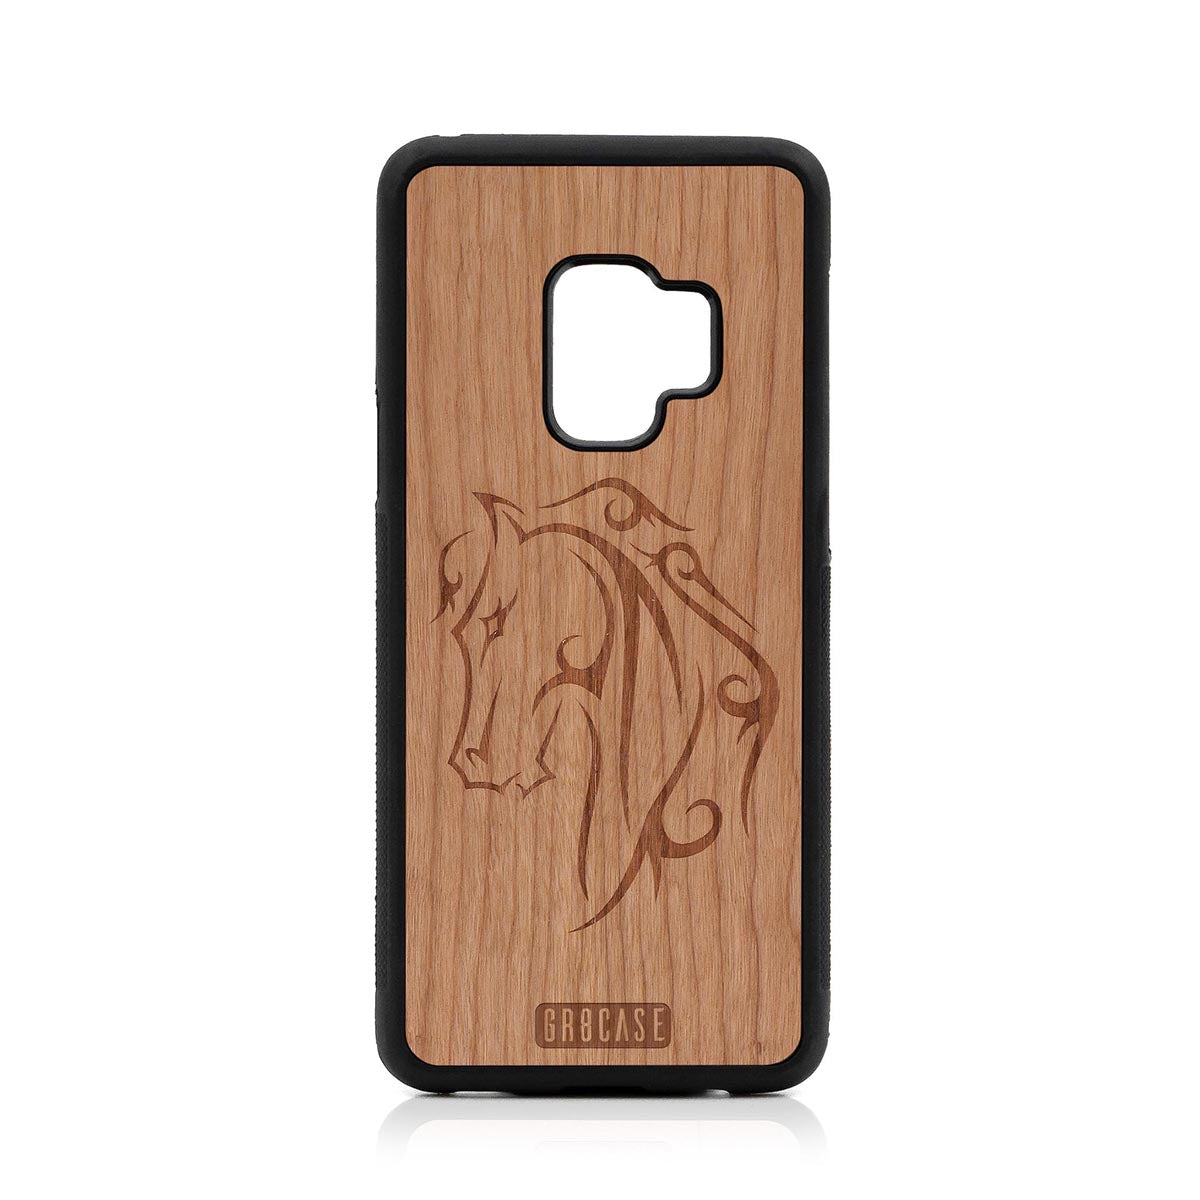 Horse Tattoo Design Wood Case Samsung Galaxy S9 by GR8CASE